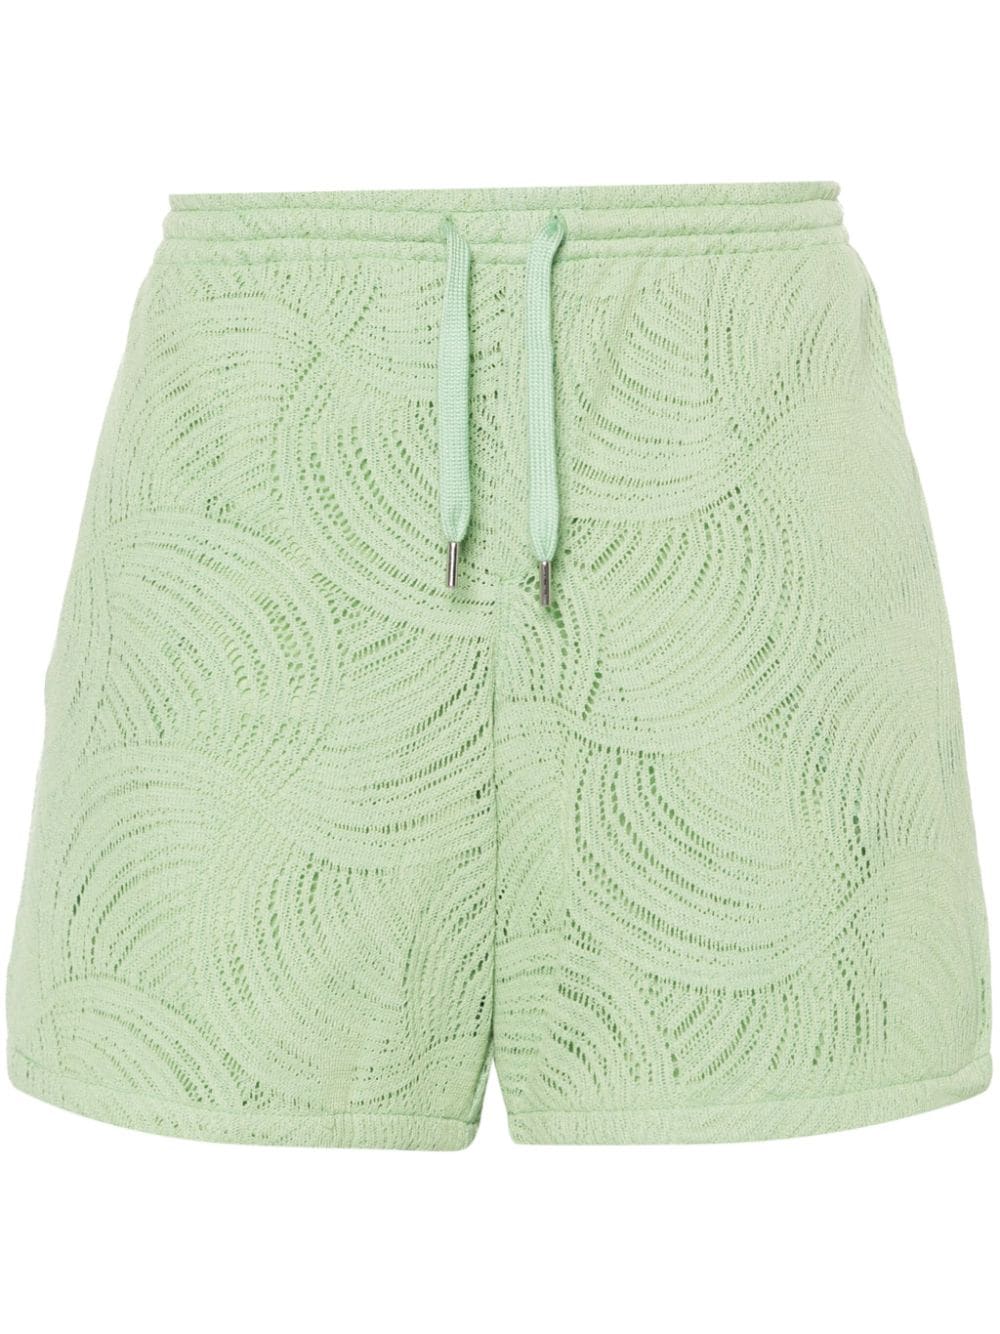 ARTE Gebreide shorts Groen